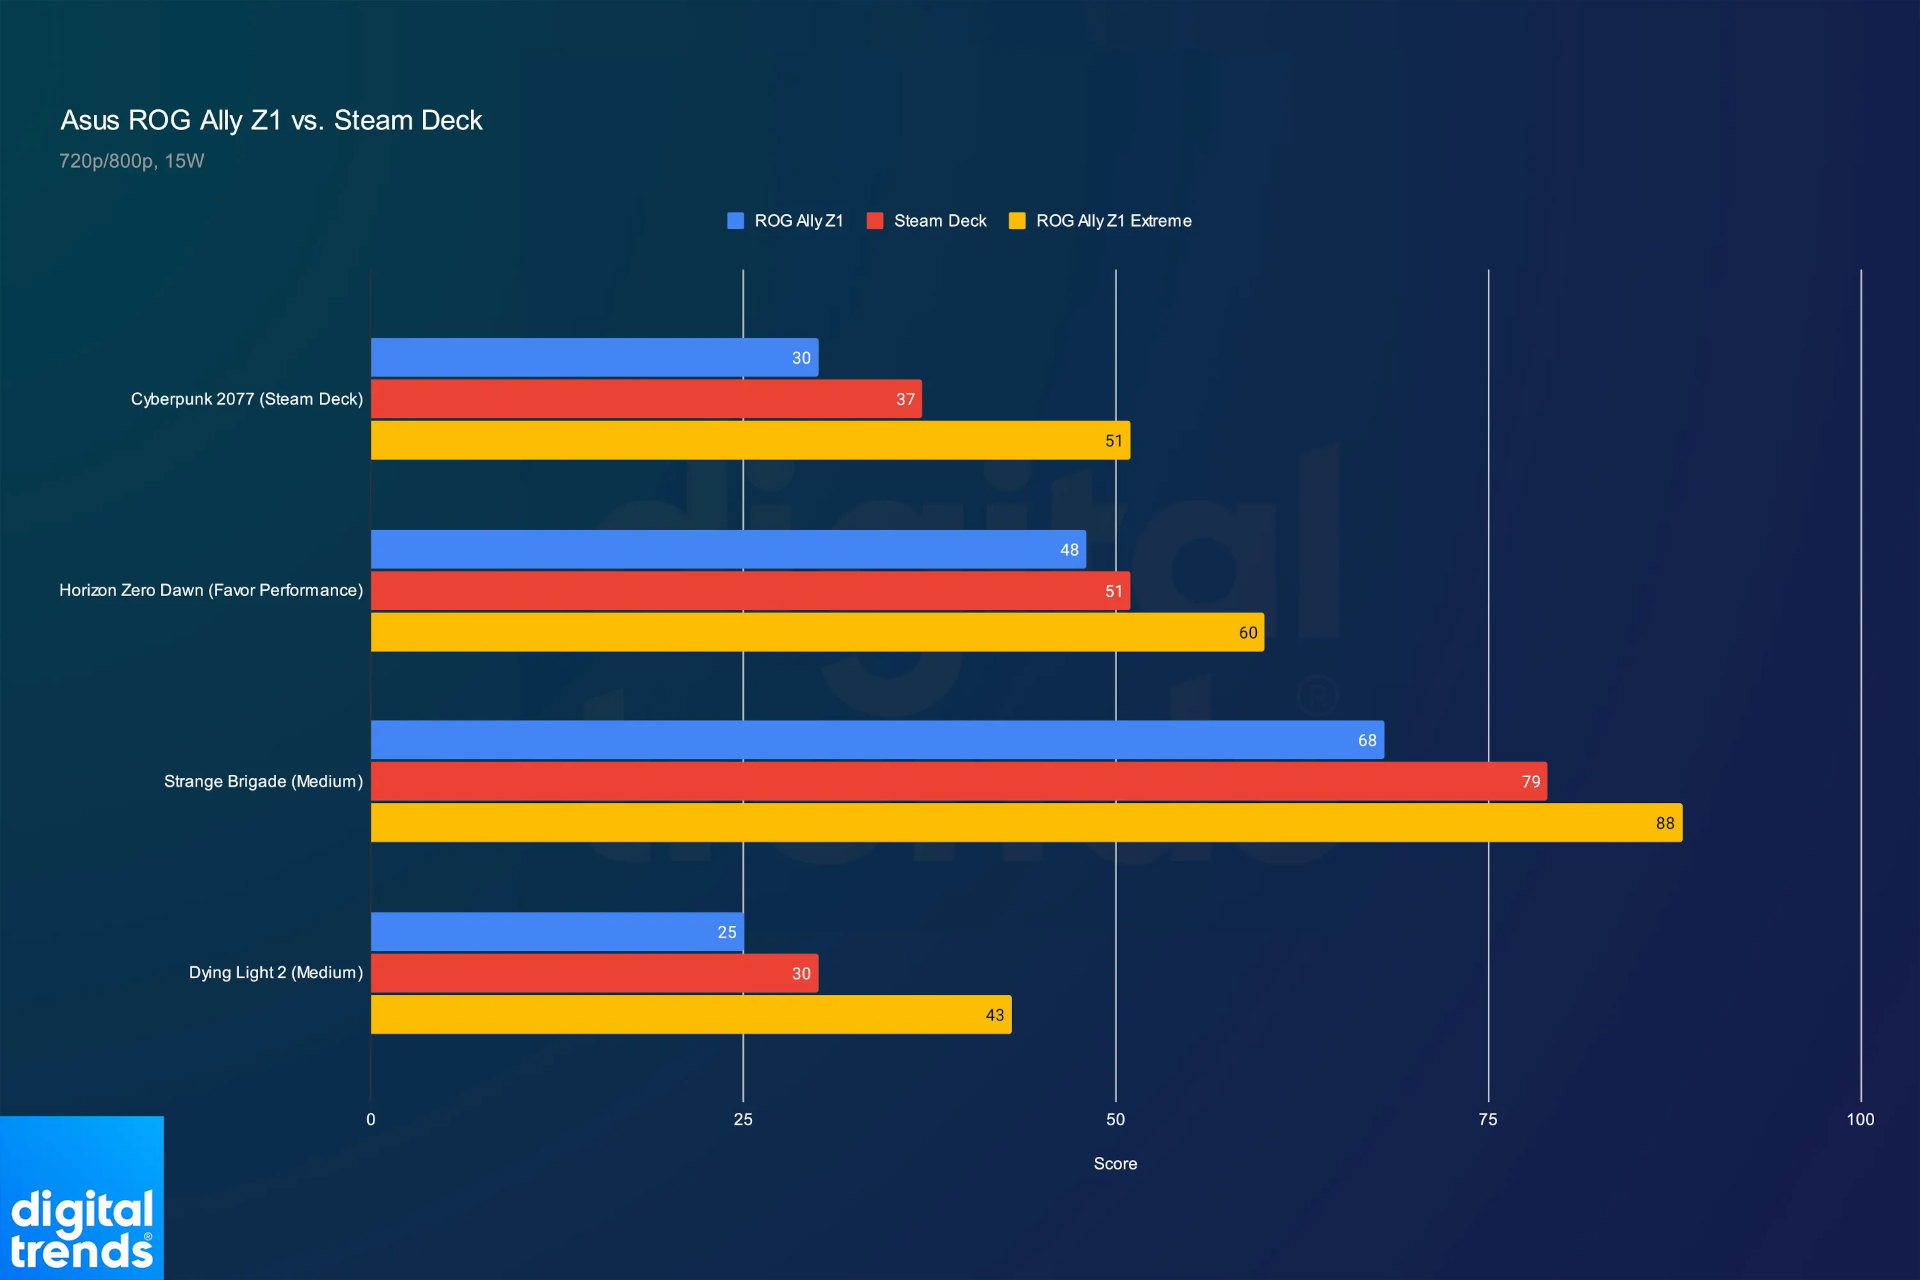 ASUS ROG Ally Z1 vs Steam Deck Digital Trends